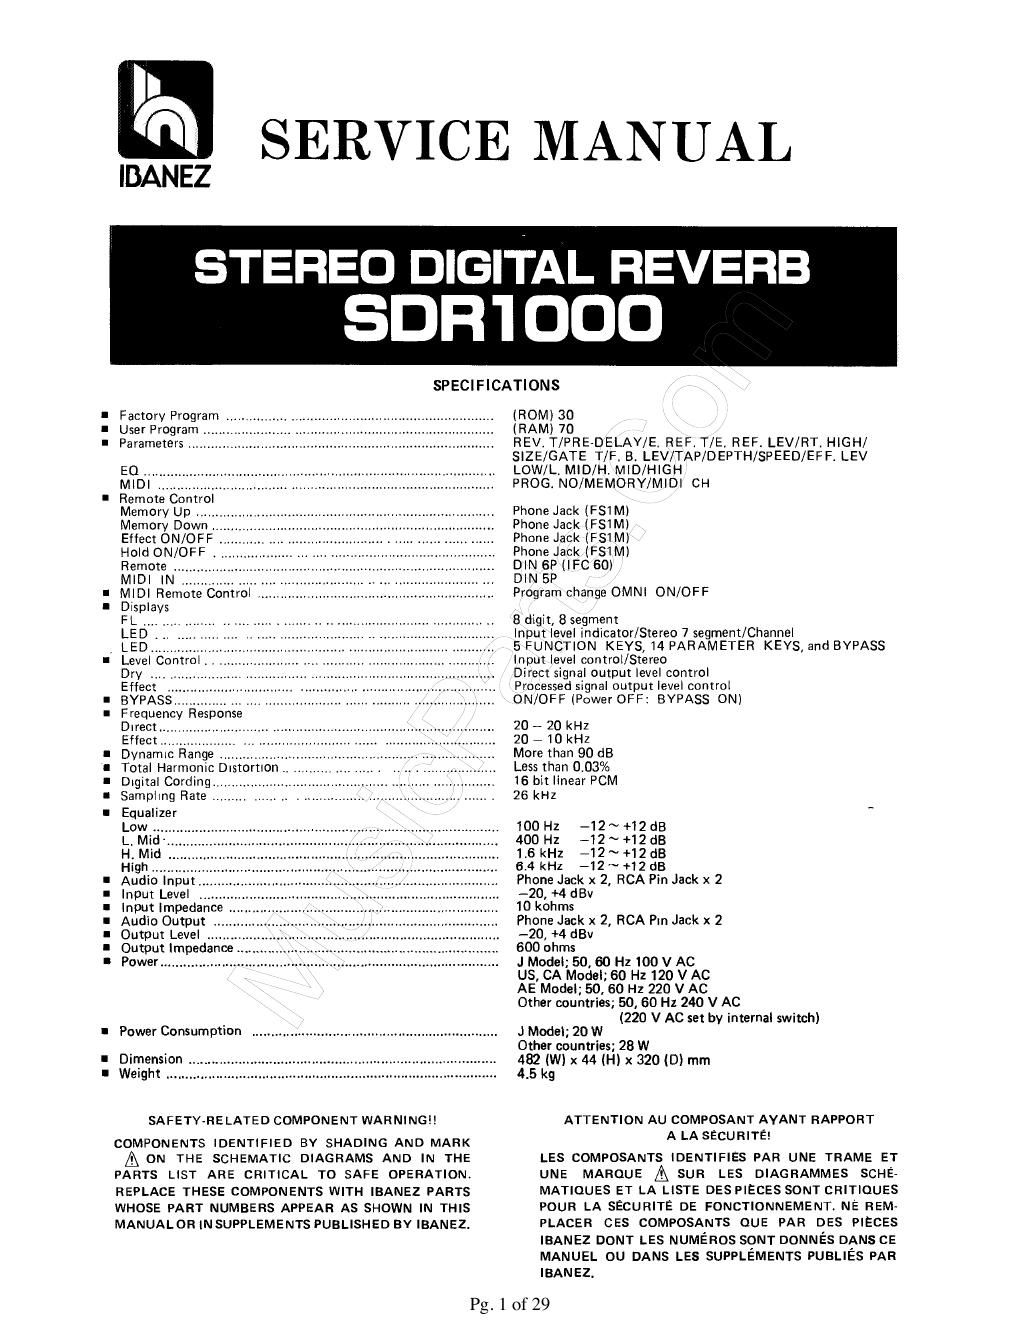 Ibanez SDR1000 Stereo Digital Reverb Service Manual